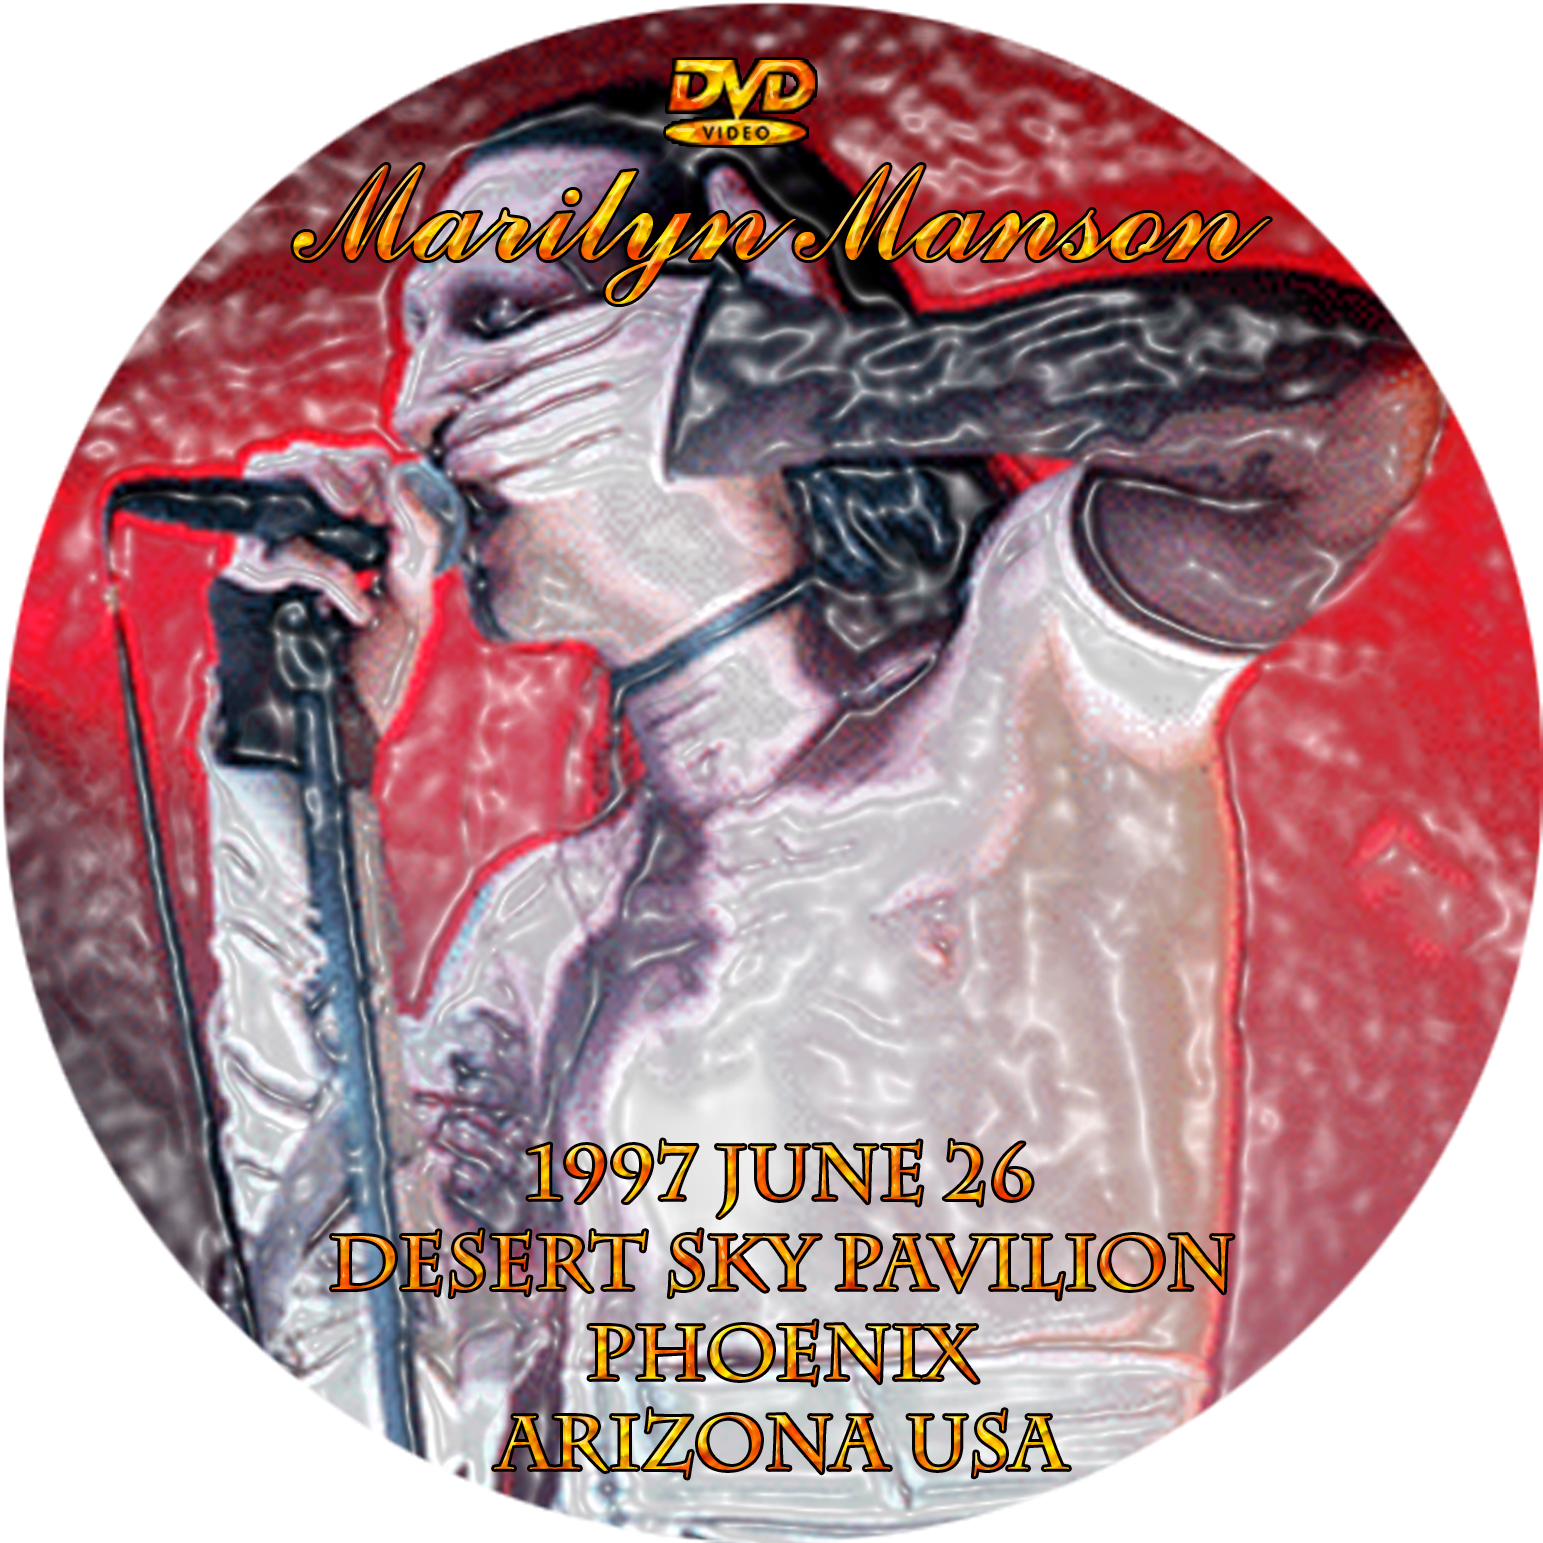 1997 June 26 Desert Sky Pavilion Phoenix Arizona USA cover